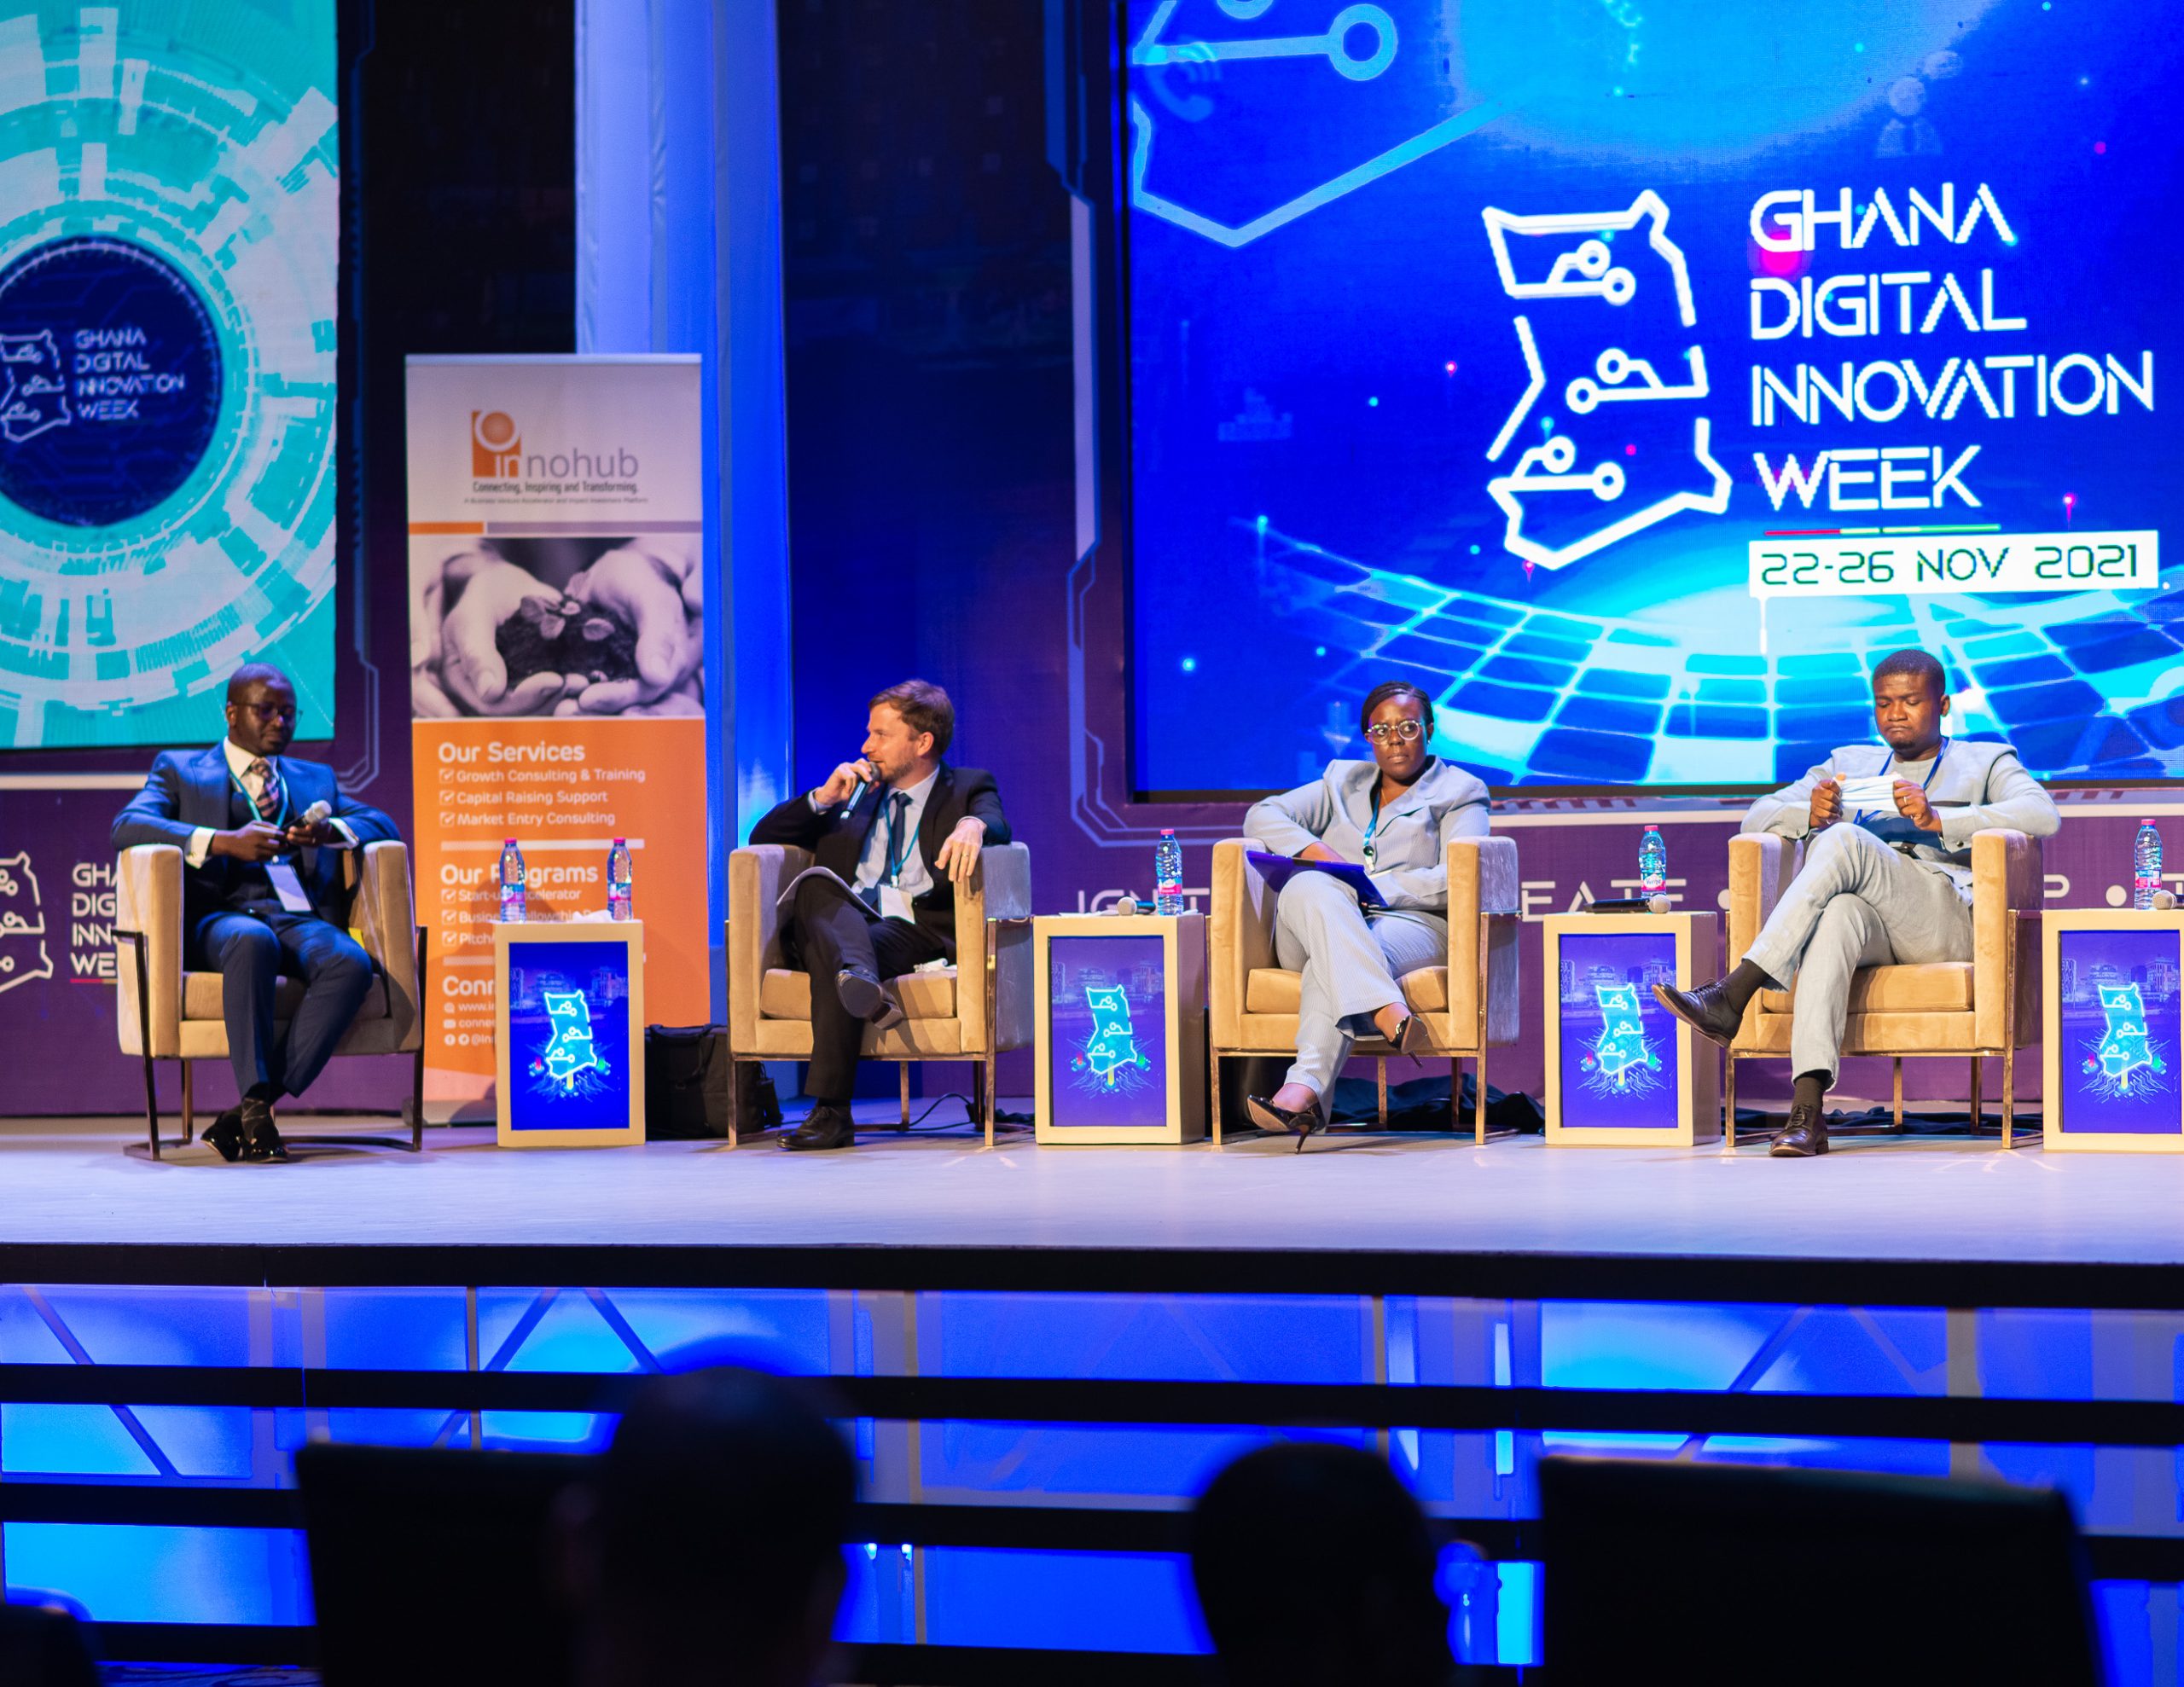 Innohub hosts discussions on “Building Partnerships for Digital Innovation” during the Ghana Digital Innovation Week